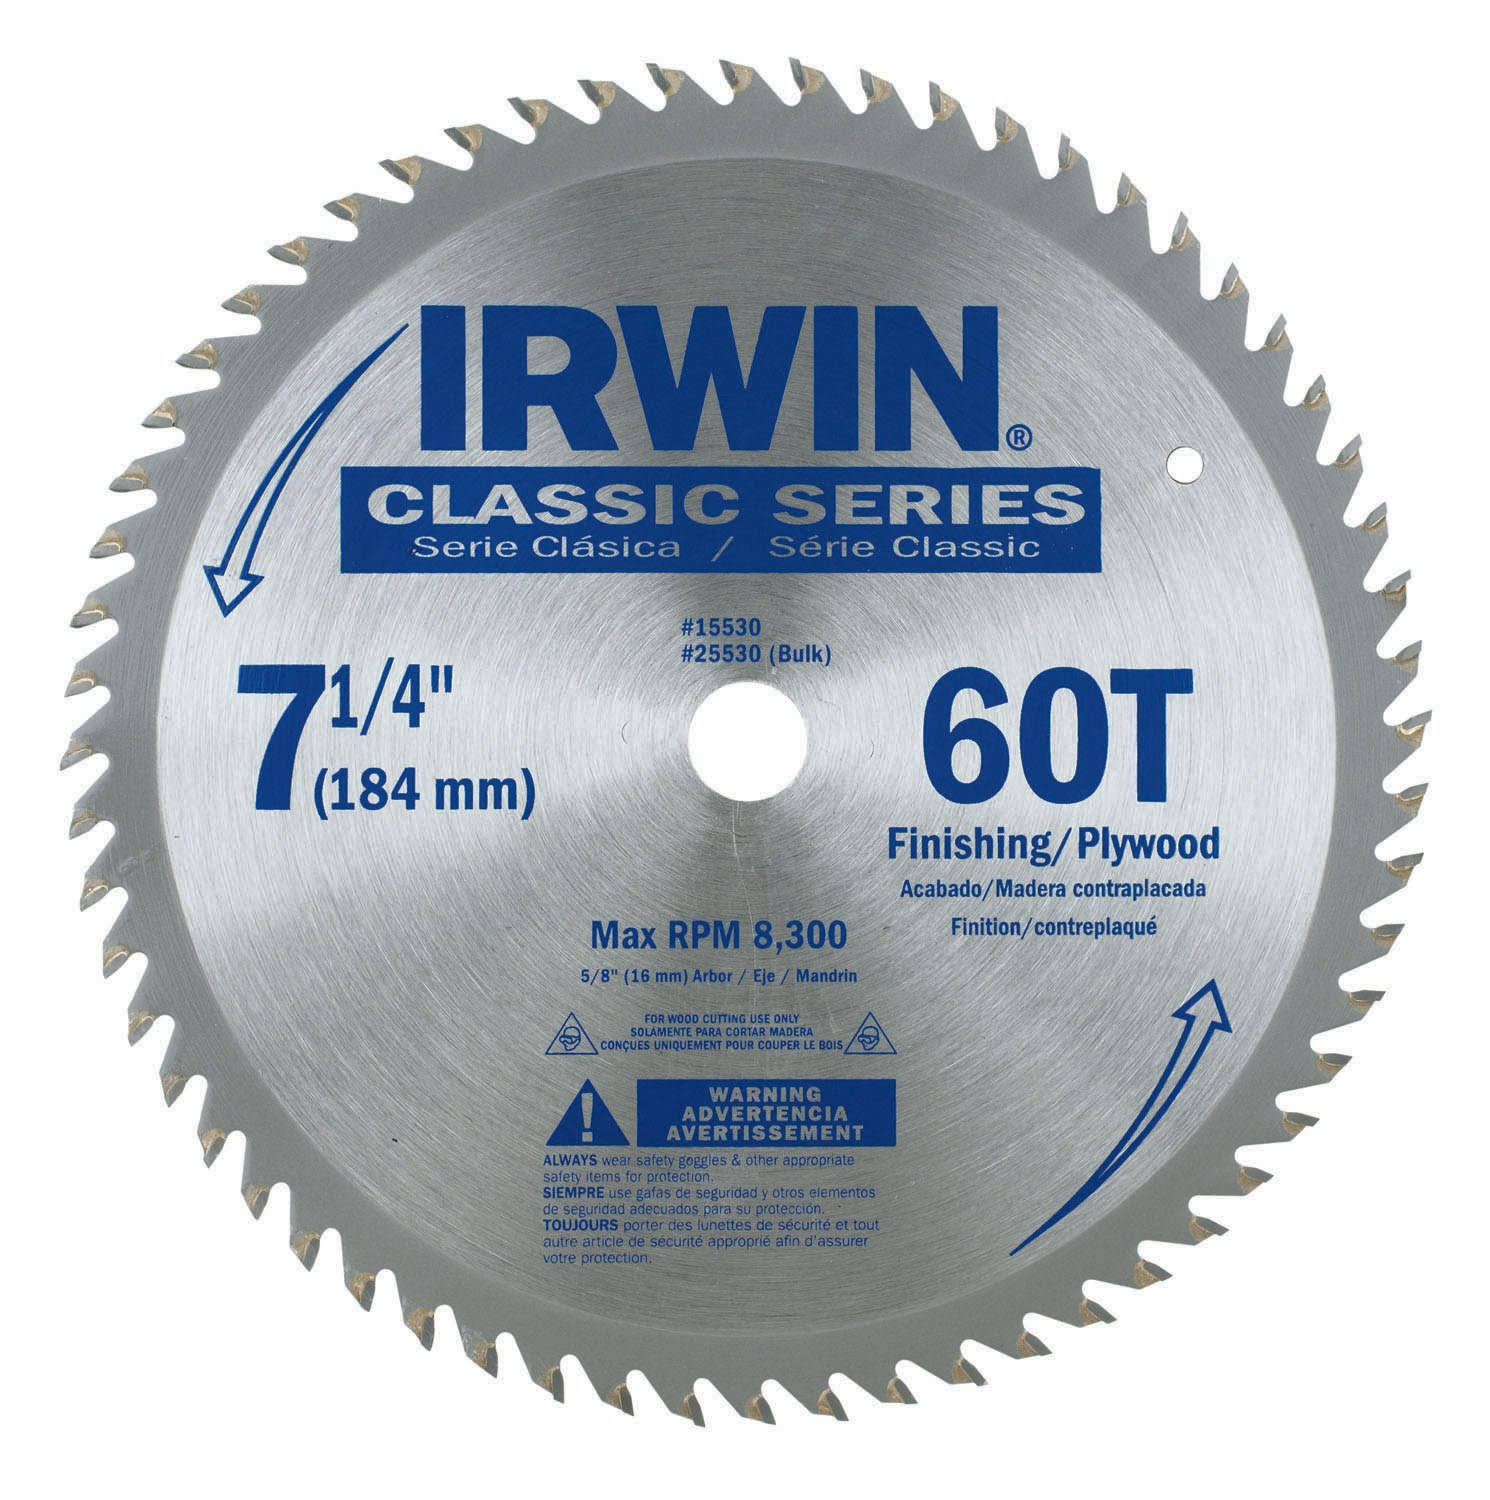 Irwin Industrial Circular Saw Blade - 7-1/4", 60T